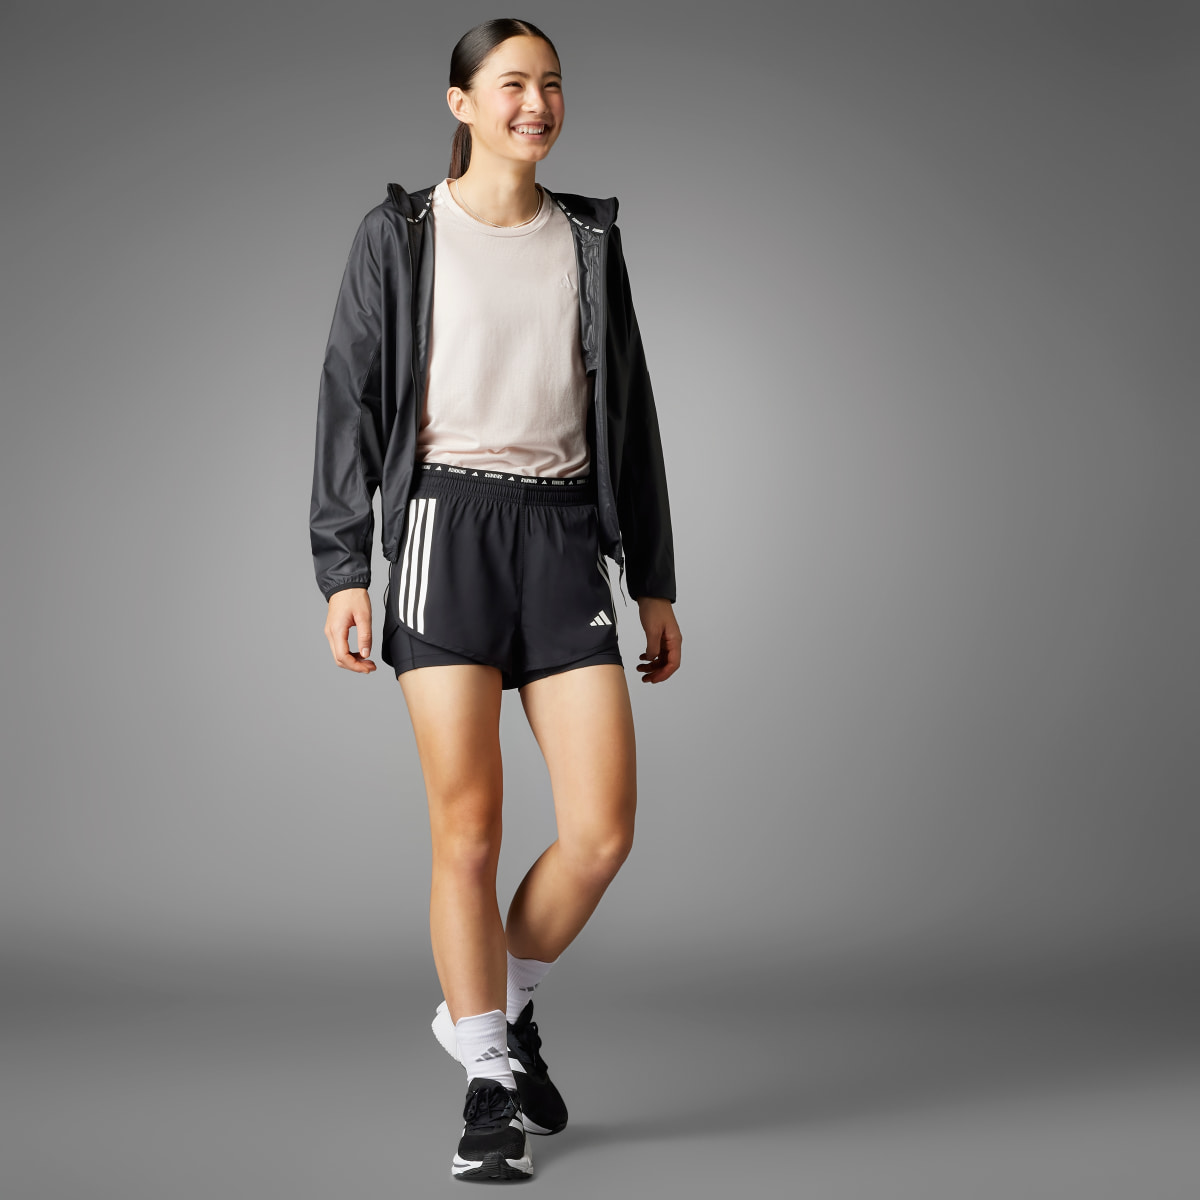 Adidas Own the Run 3-Stripes 2-in-1 Shorts. 10